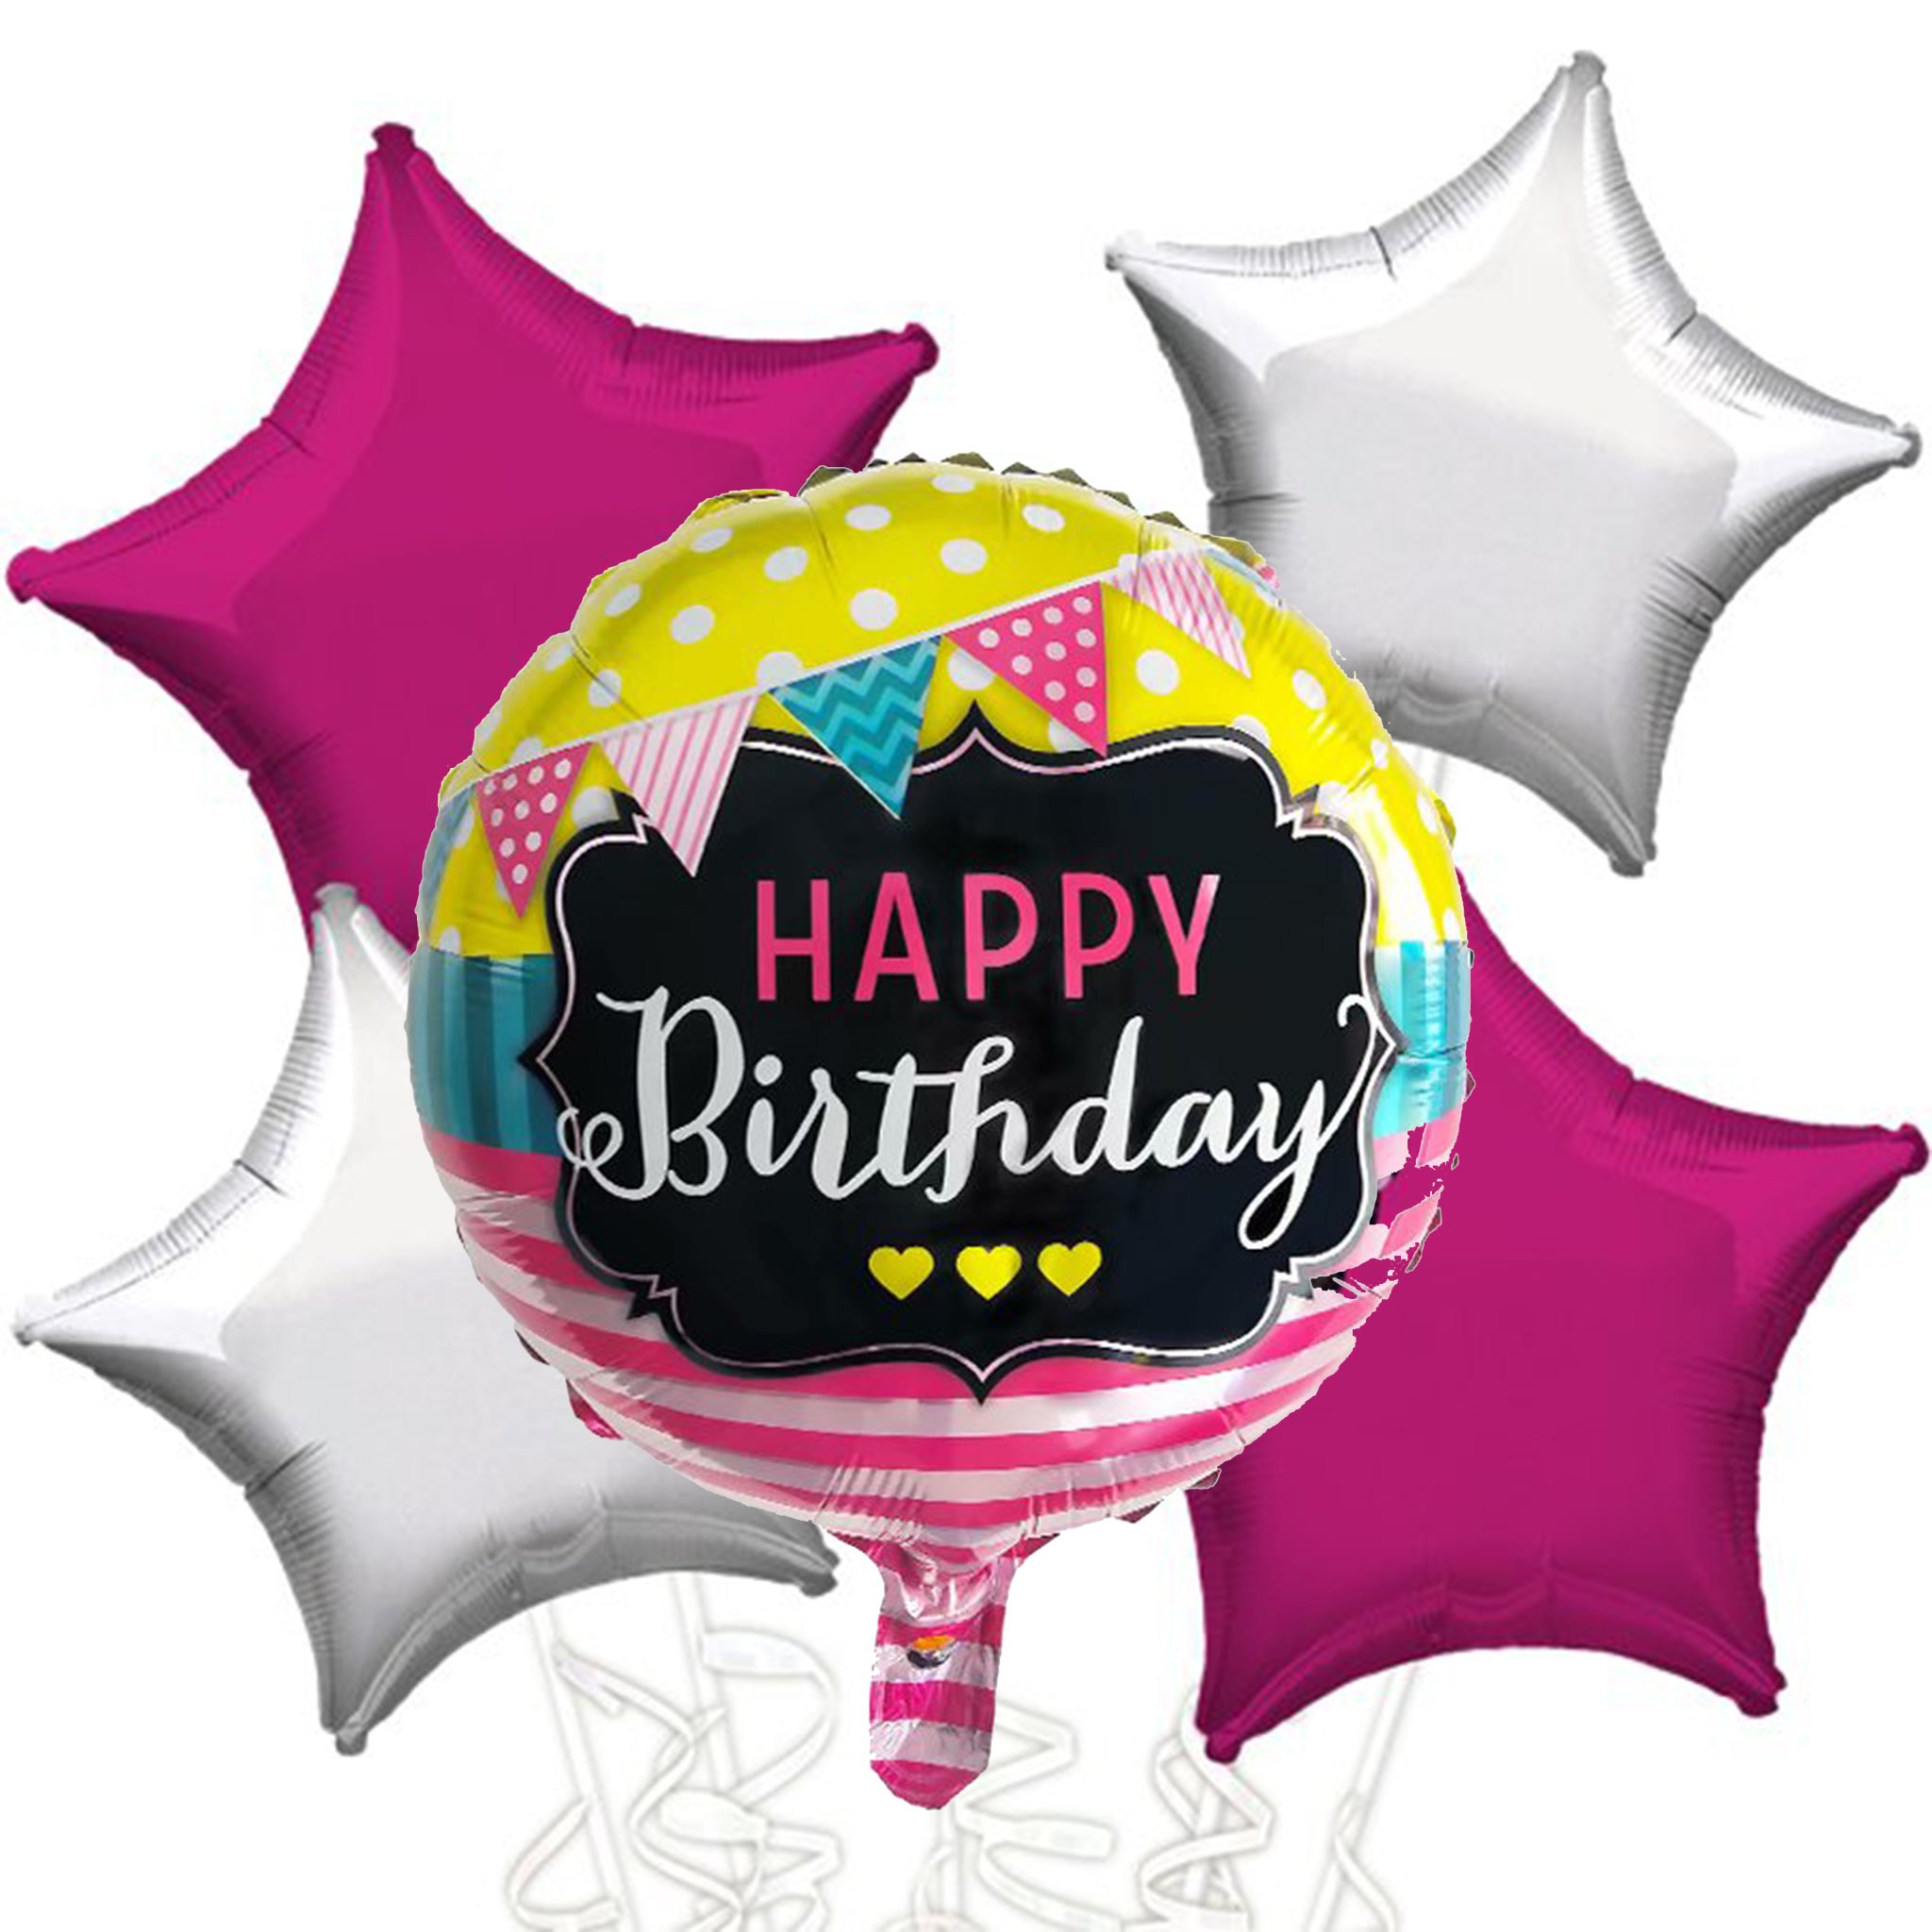 Happy Birthday balloons bouquet 01 - PartyMonster.ae